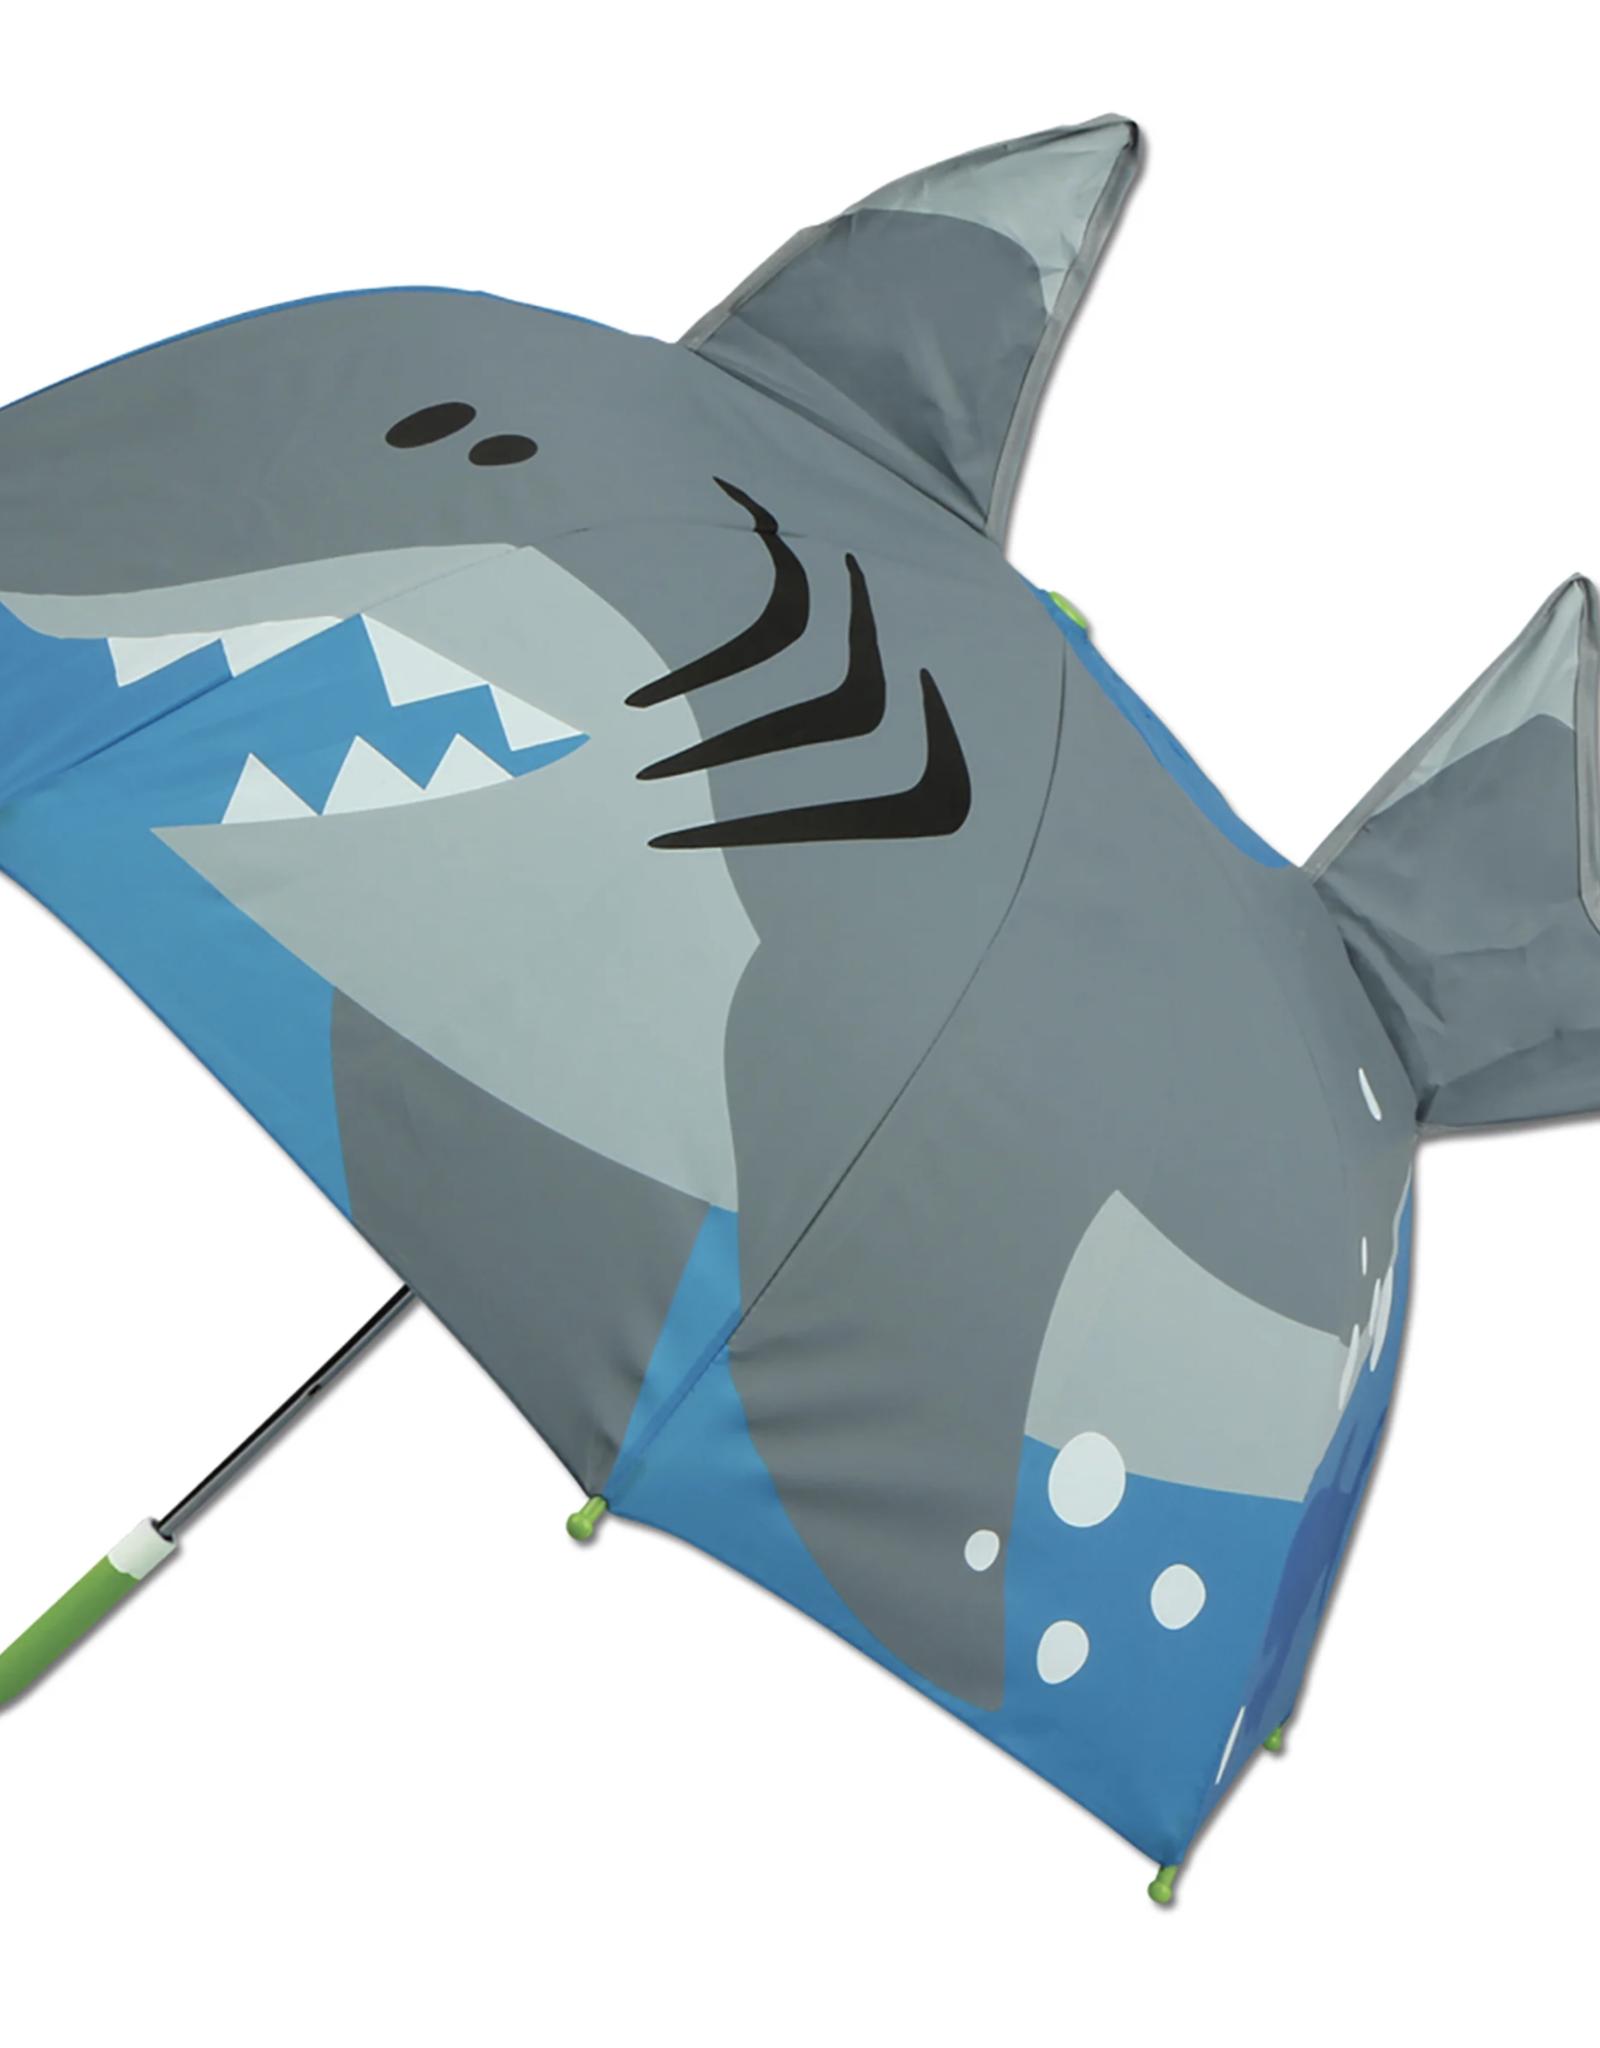 Stephen Joseph Shark Umbrella